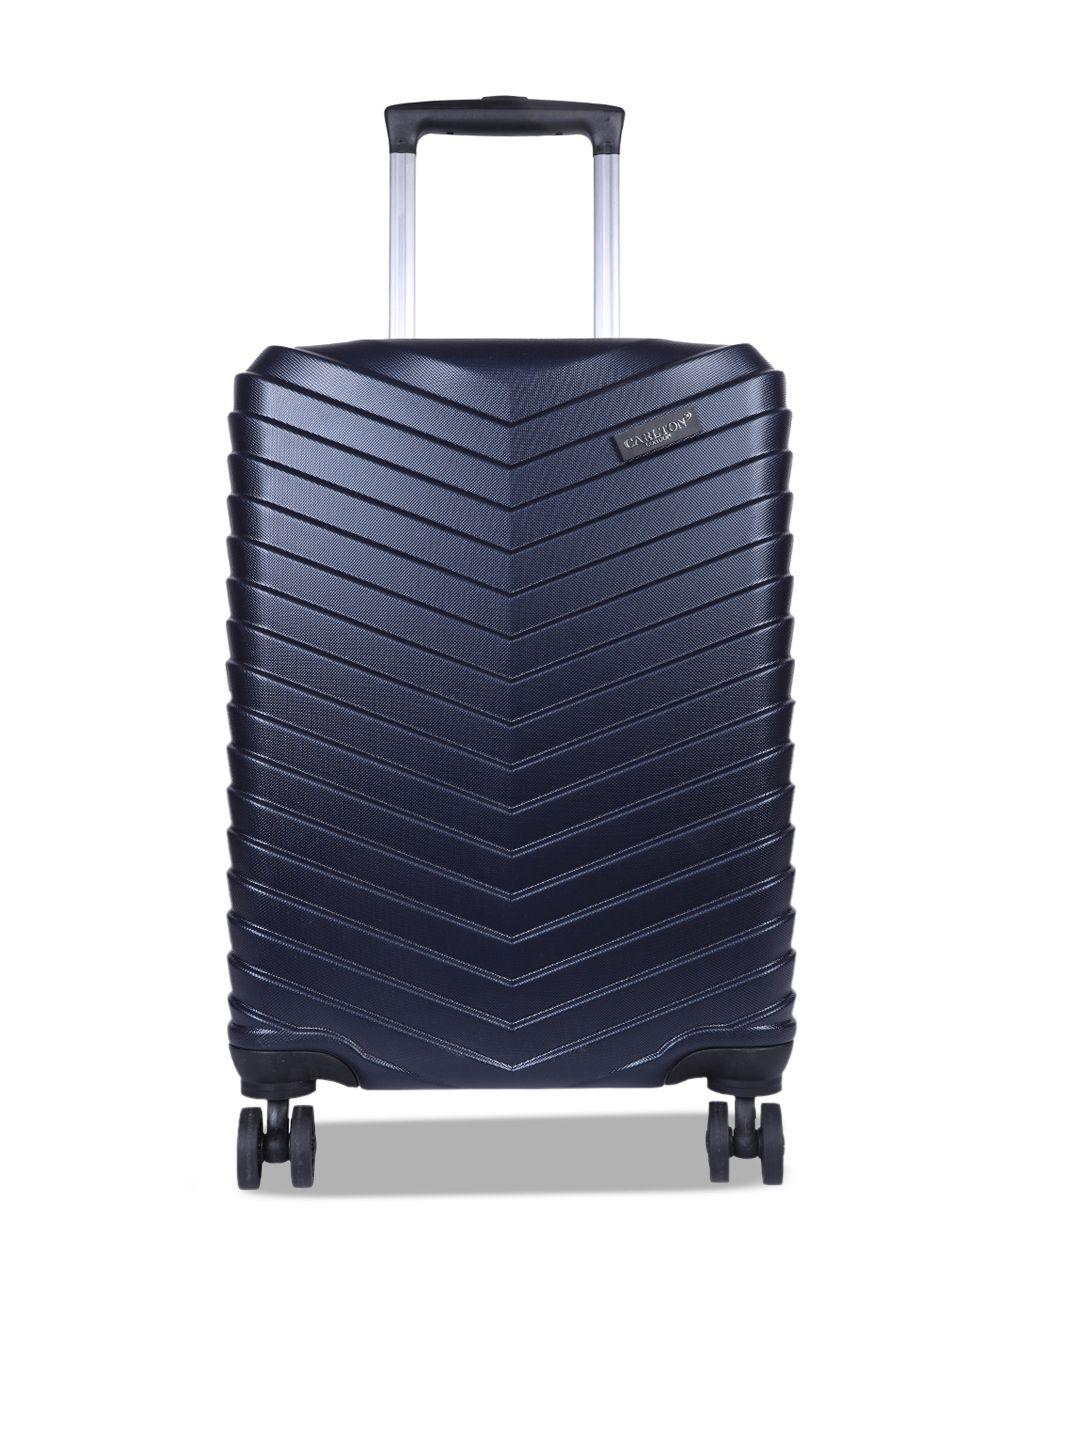 carlton-london-textured-360-degree-rotation-hard-sided-cabin-trolley-bag